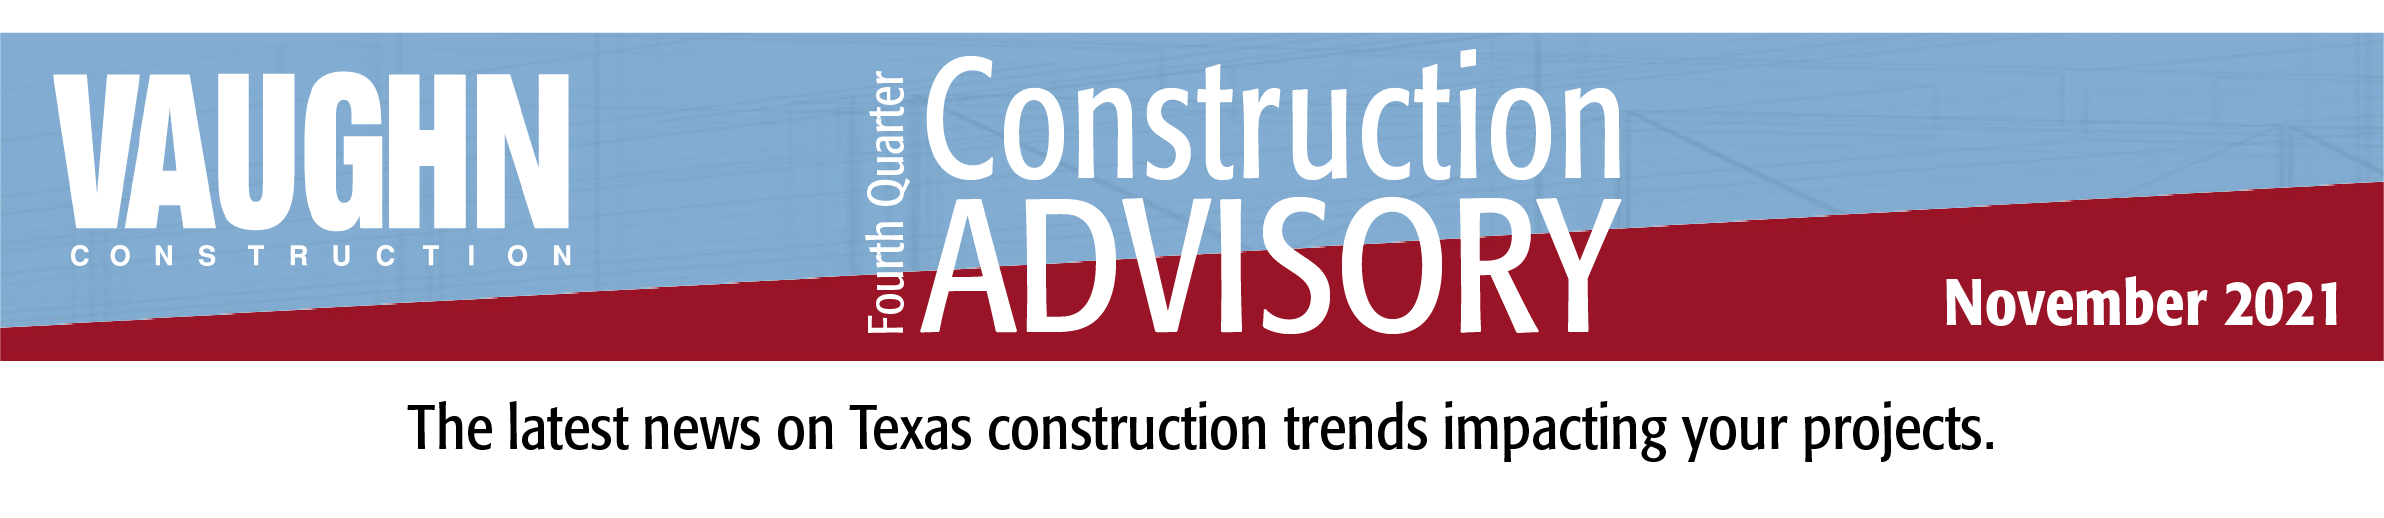 Construction Advisory_Q2 2020